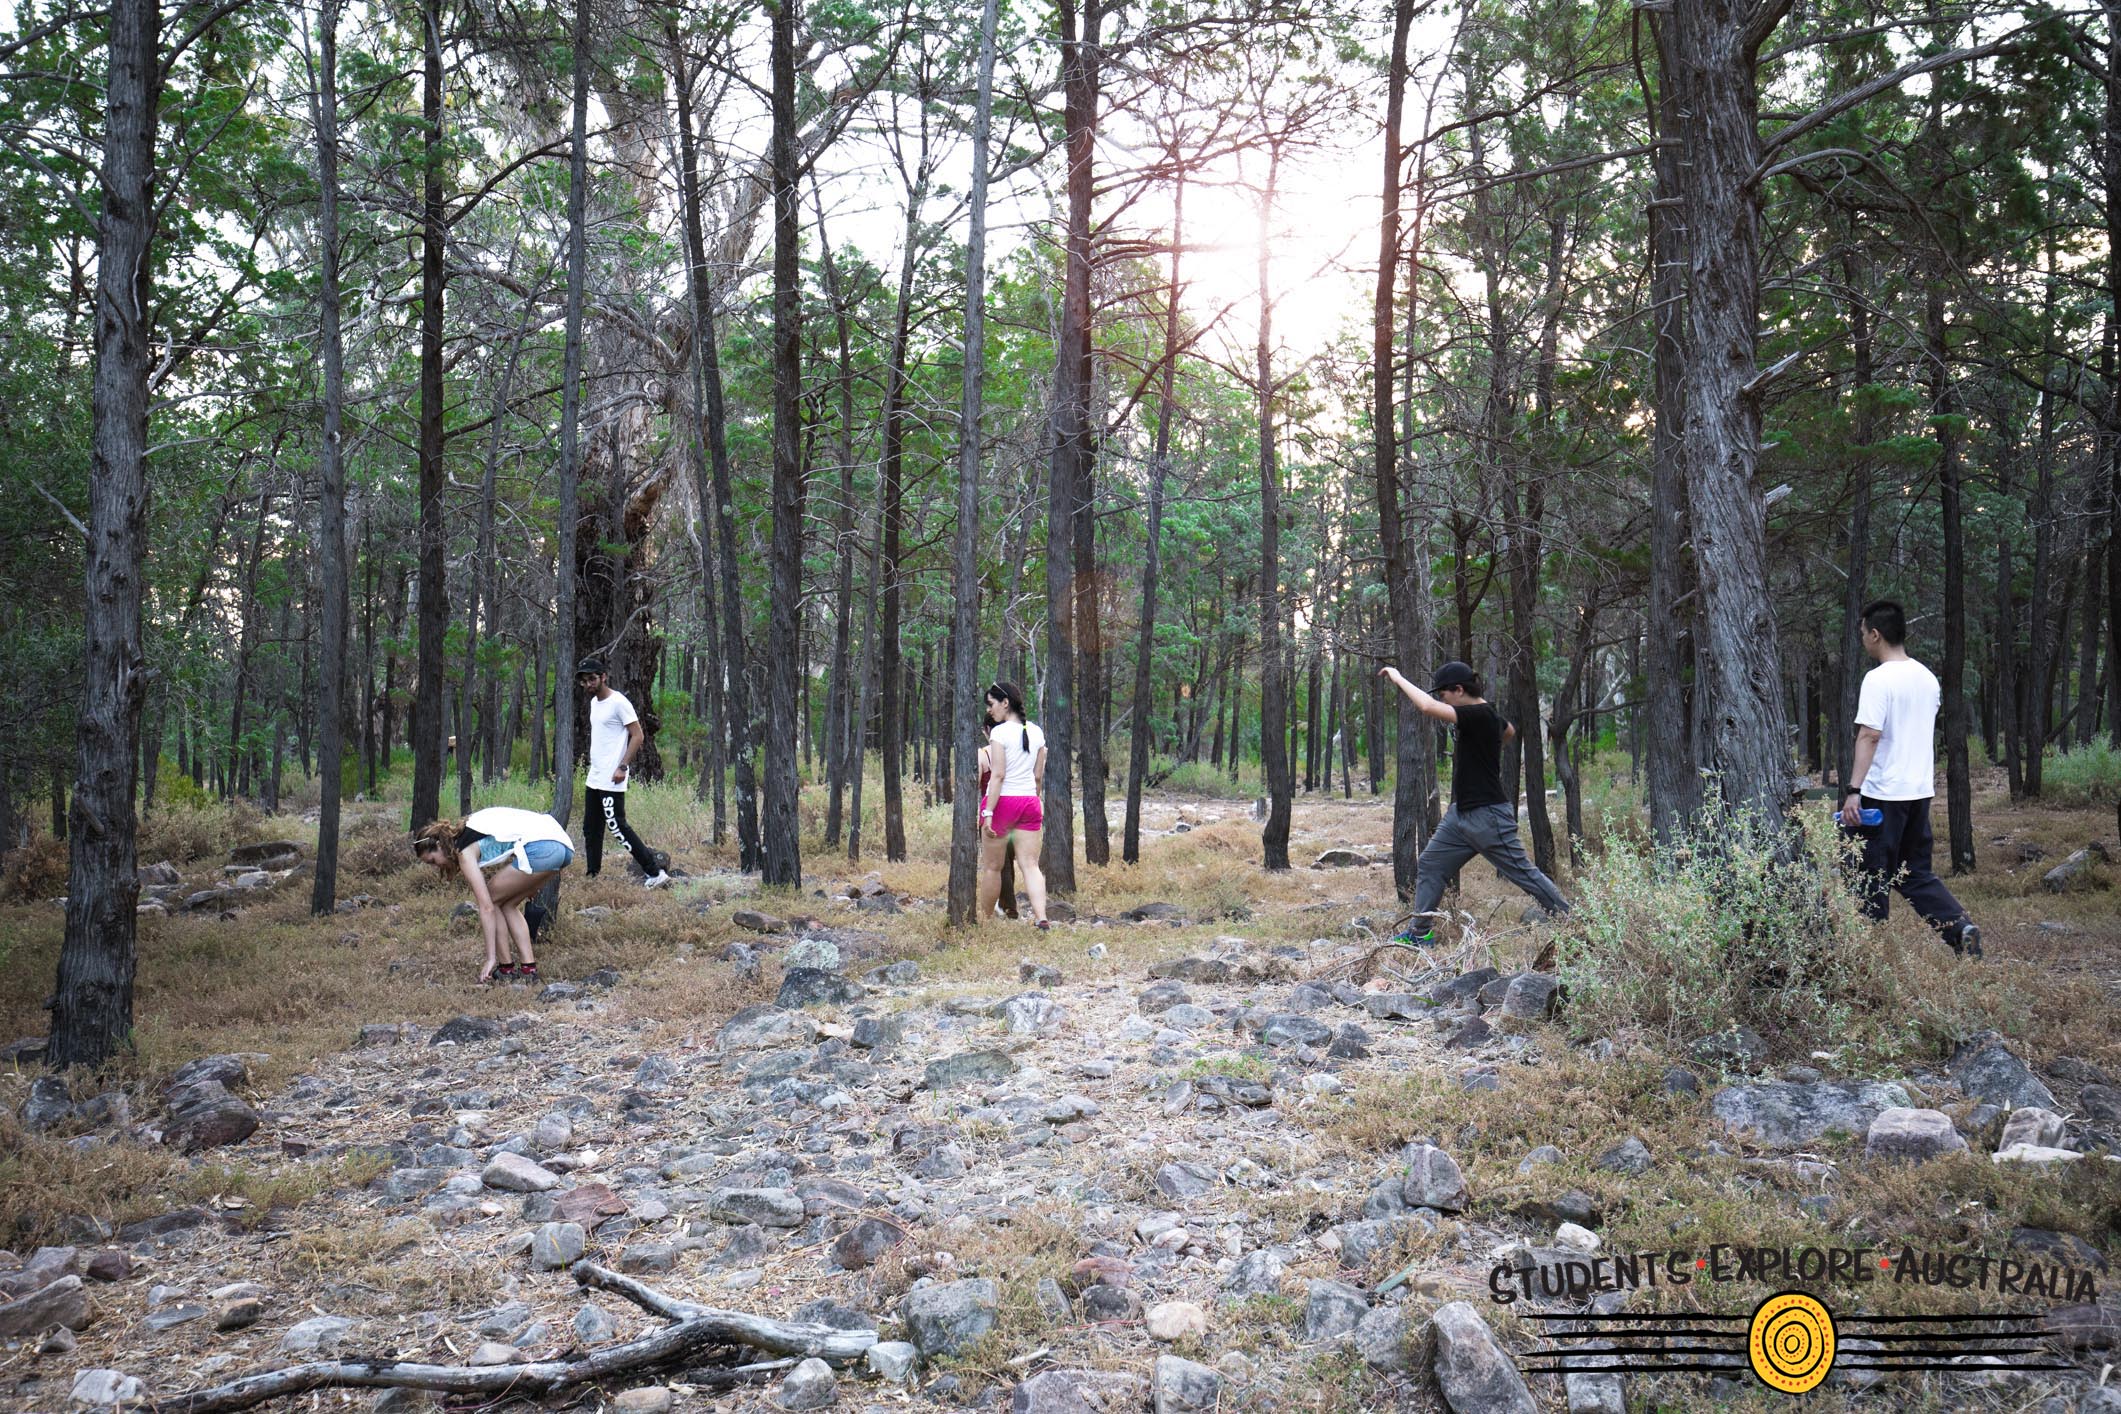 Students Explore Australia - Flinders Ranges Camp (66)